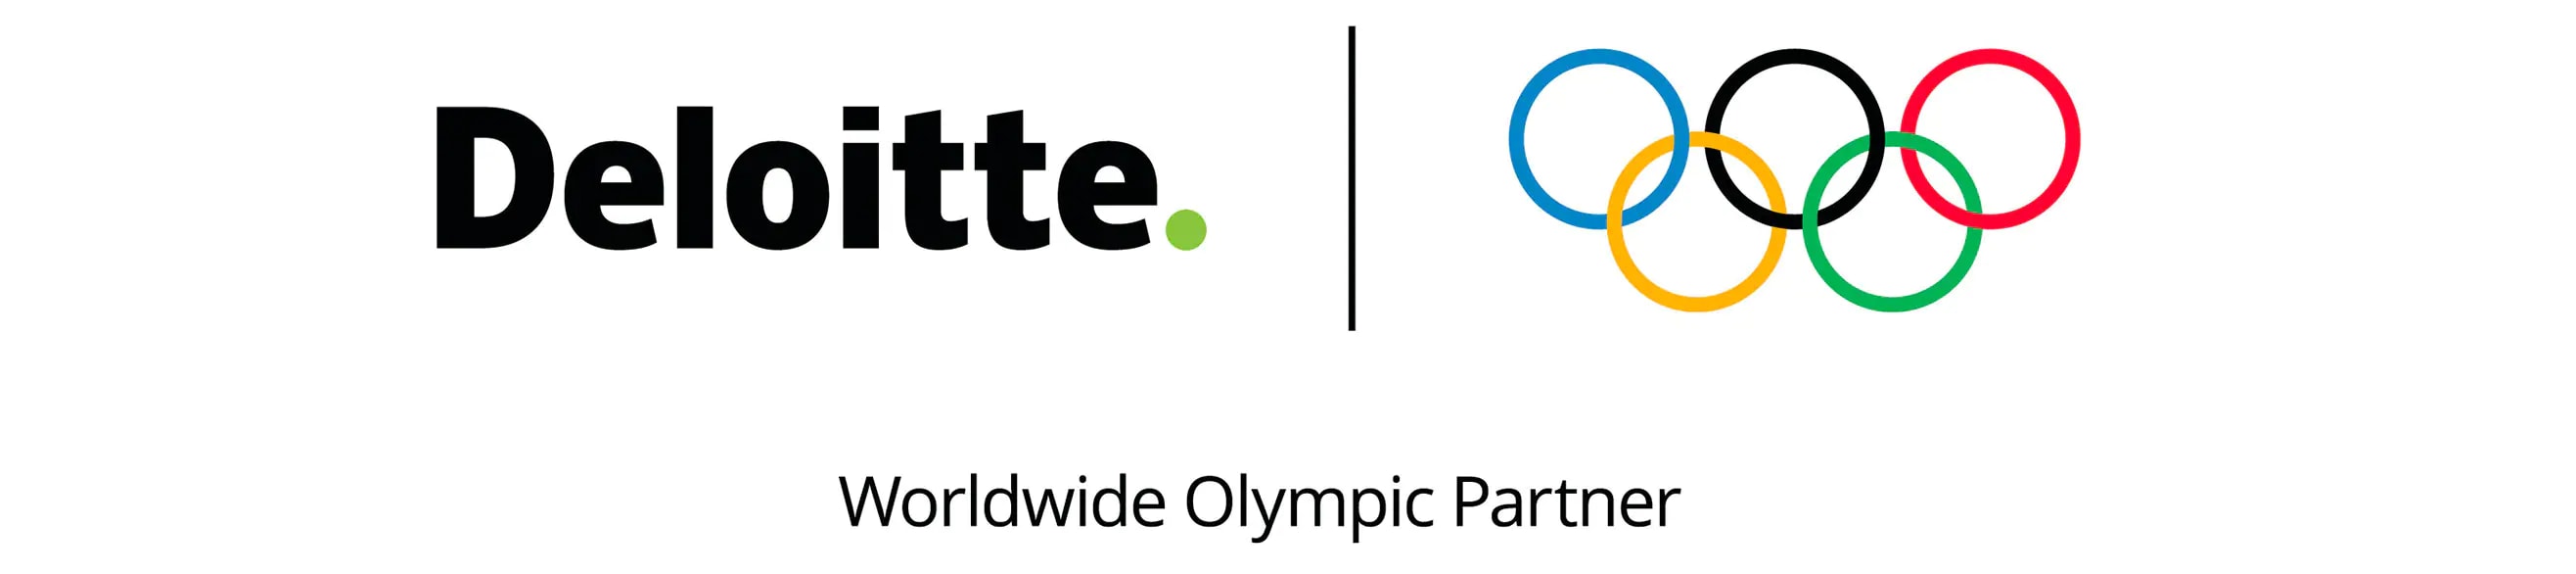 Deloitte-banner